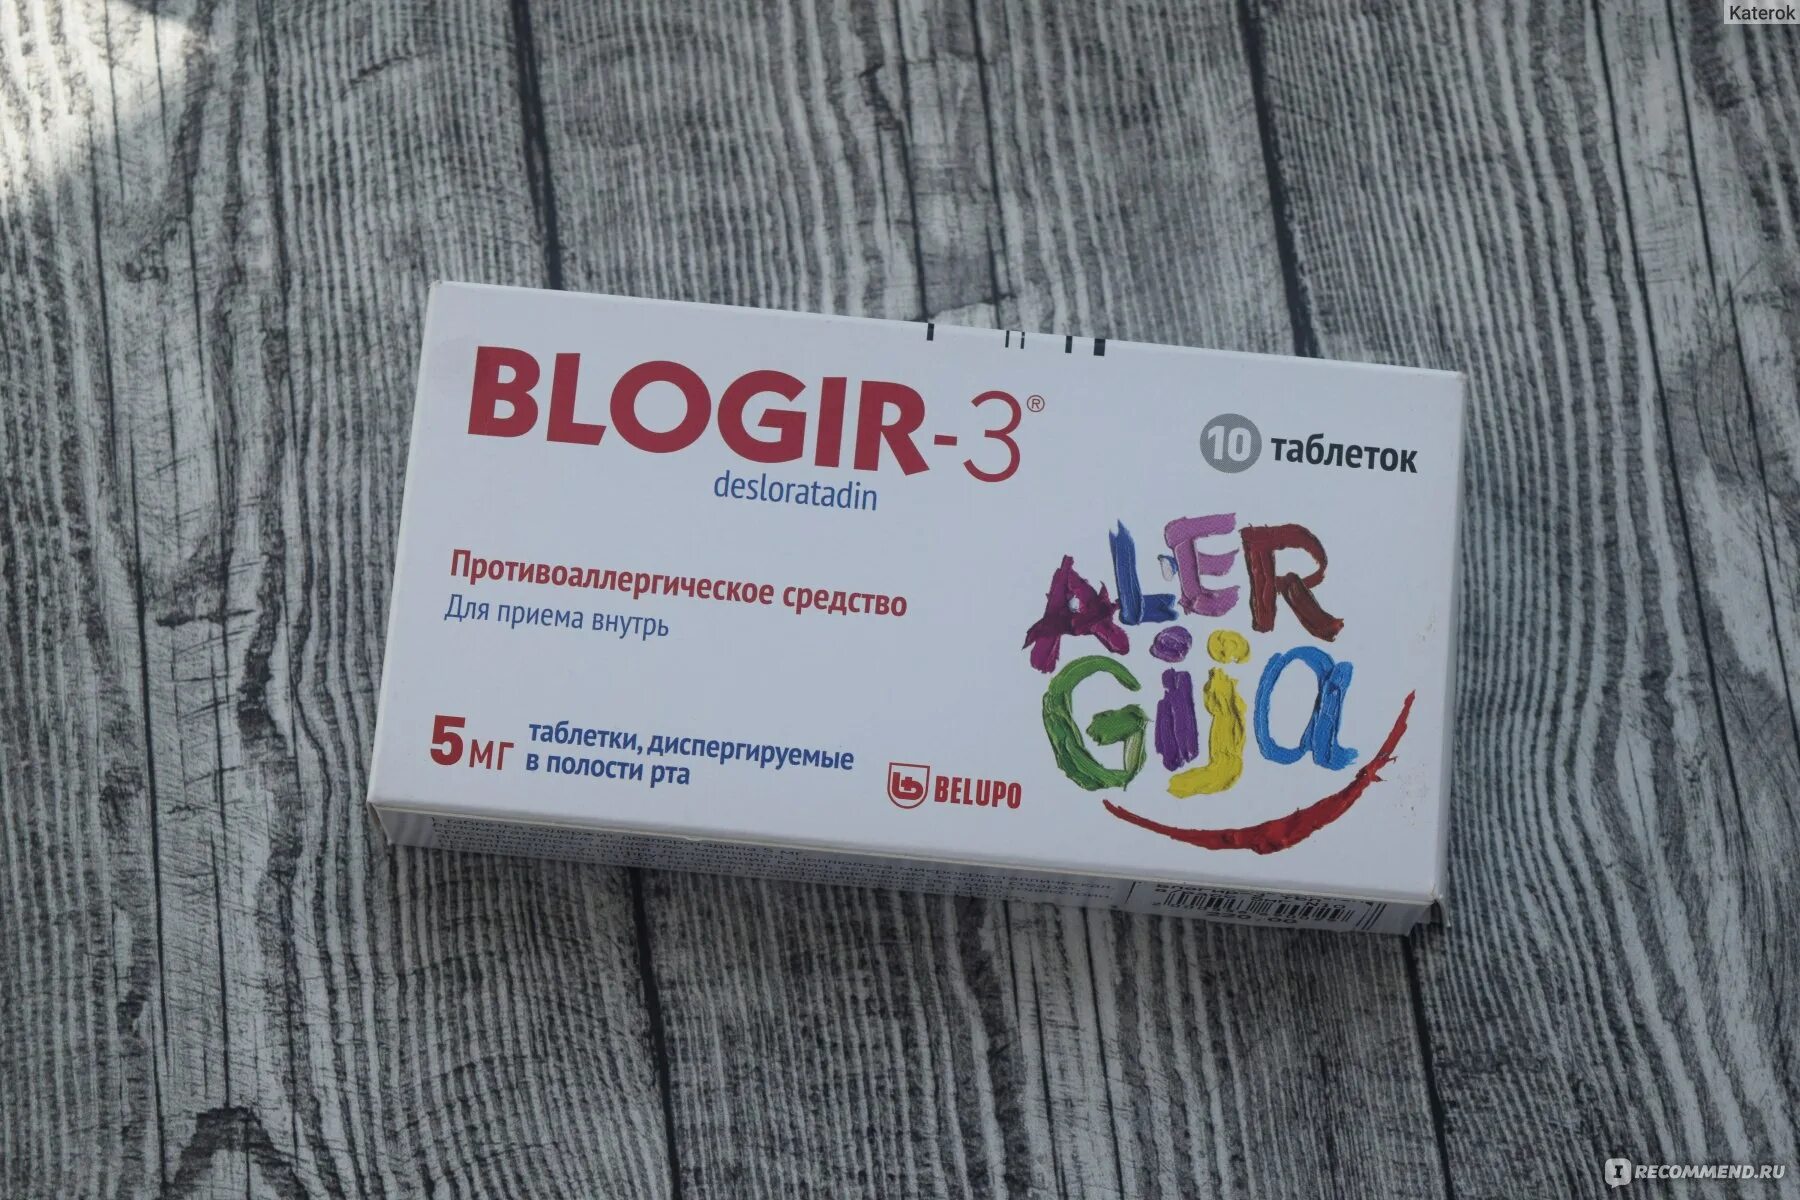 Сильные препараты от аллергии. Таблетки от аллергии блогир-3. Таблетки от аллергии на ц. Лекарство от аллергии на цветение. Препараты от аллергии на цветение.